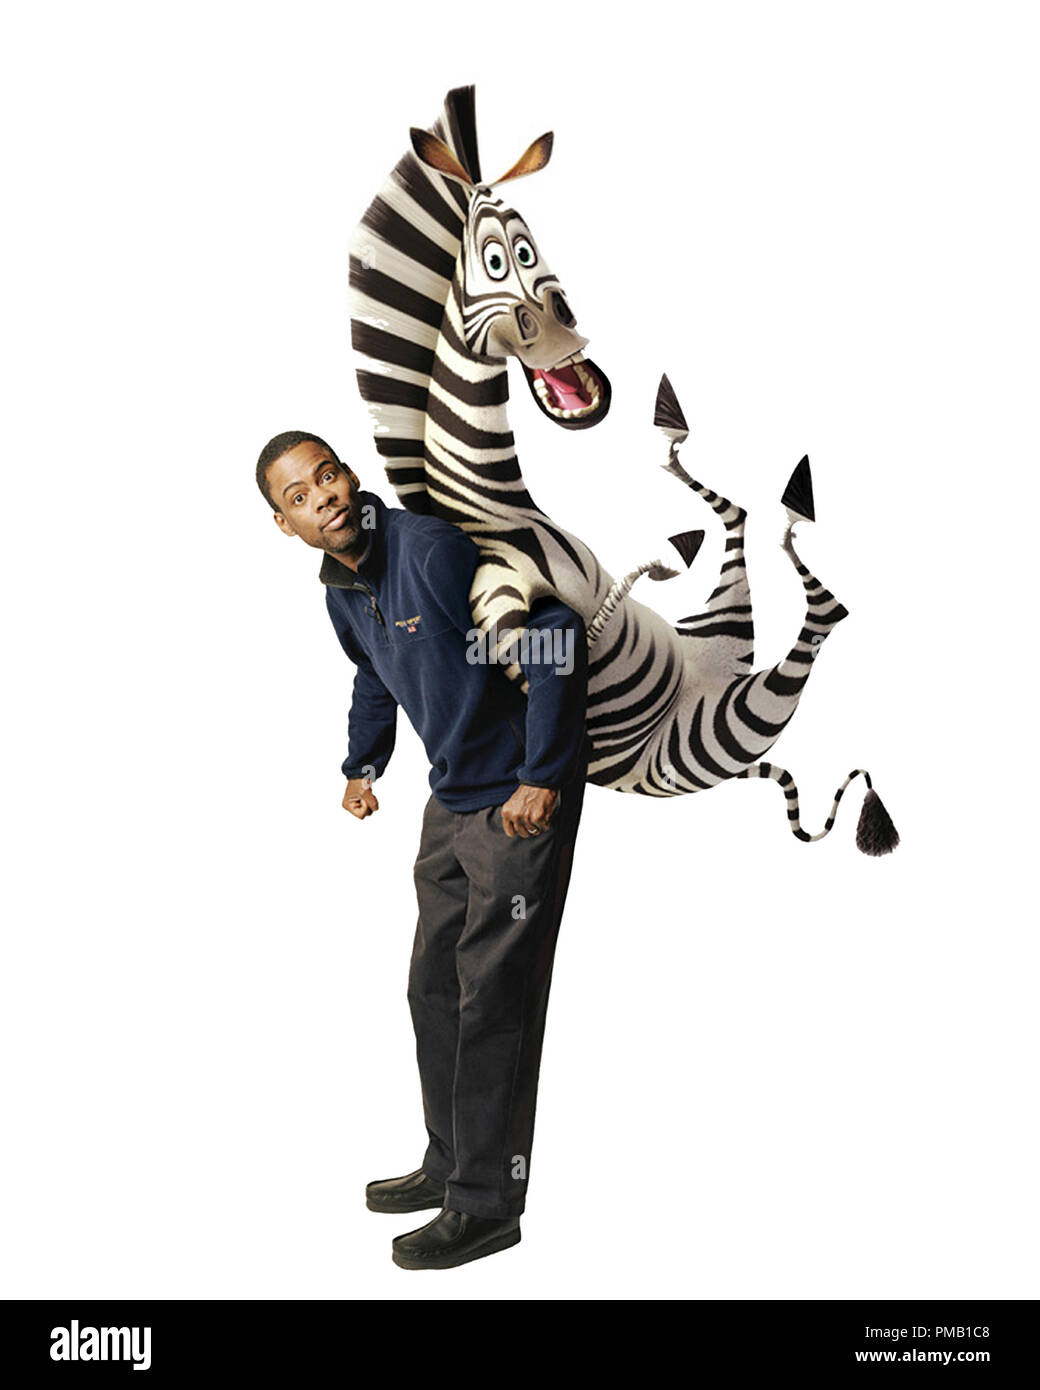 CHRIS ROCK voices Marty the zebra in DreamWorks’ “Madagascar: Escape 2 Africa.”  DreamWorks SKG Presents a PDI / DreamWorks Production “Madagascar: Escape 2 Africa,”   'Madagascar: Escape 2 Africa' (2008) DreamWorks Animation L.L.C Stock Photo